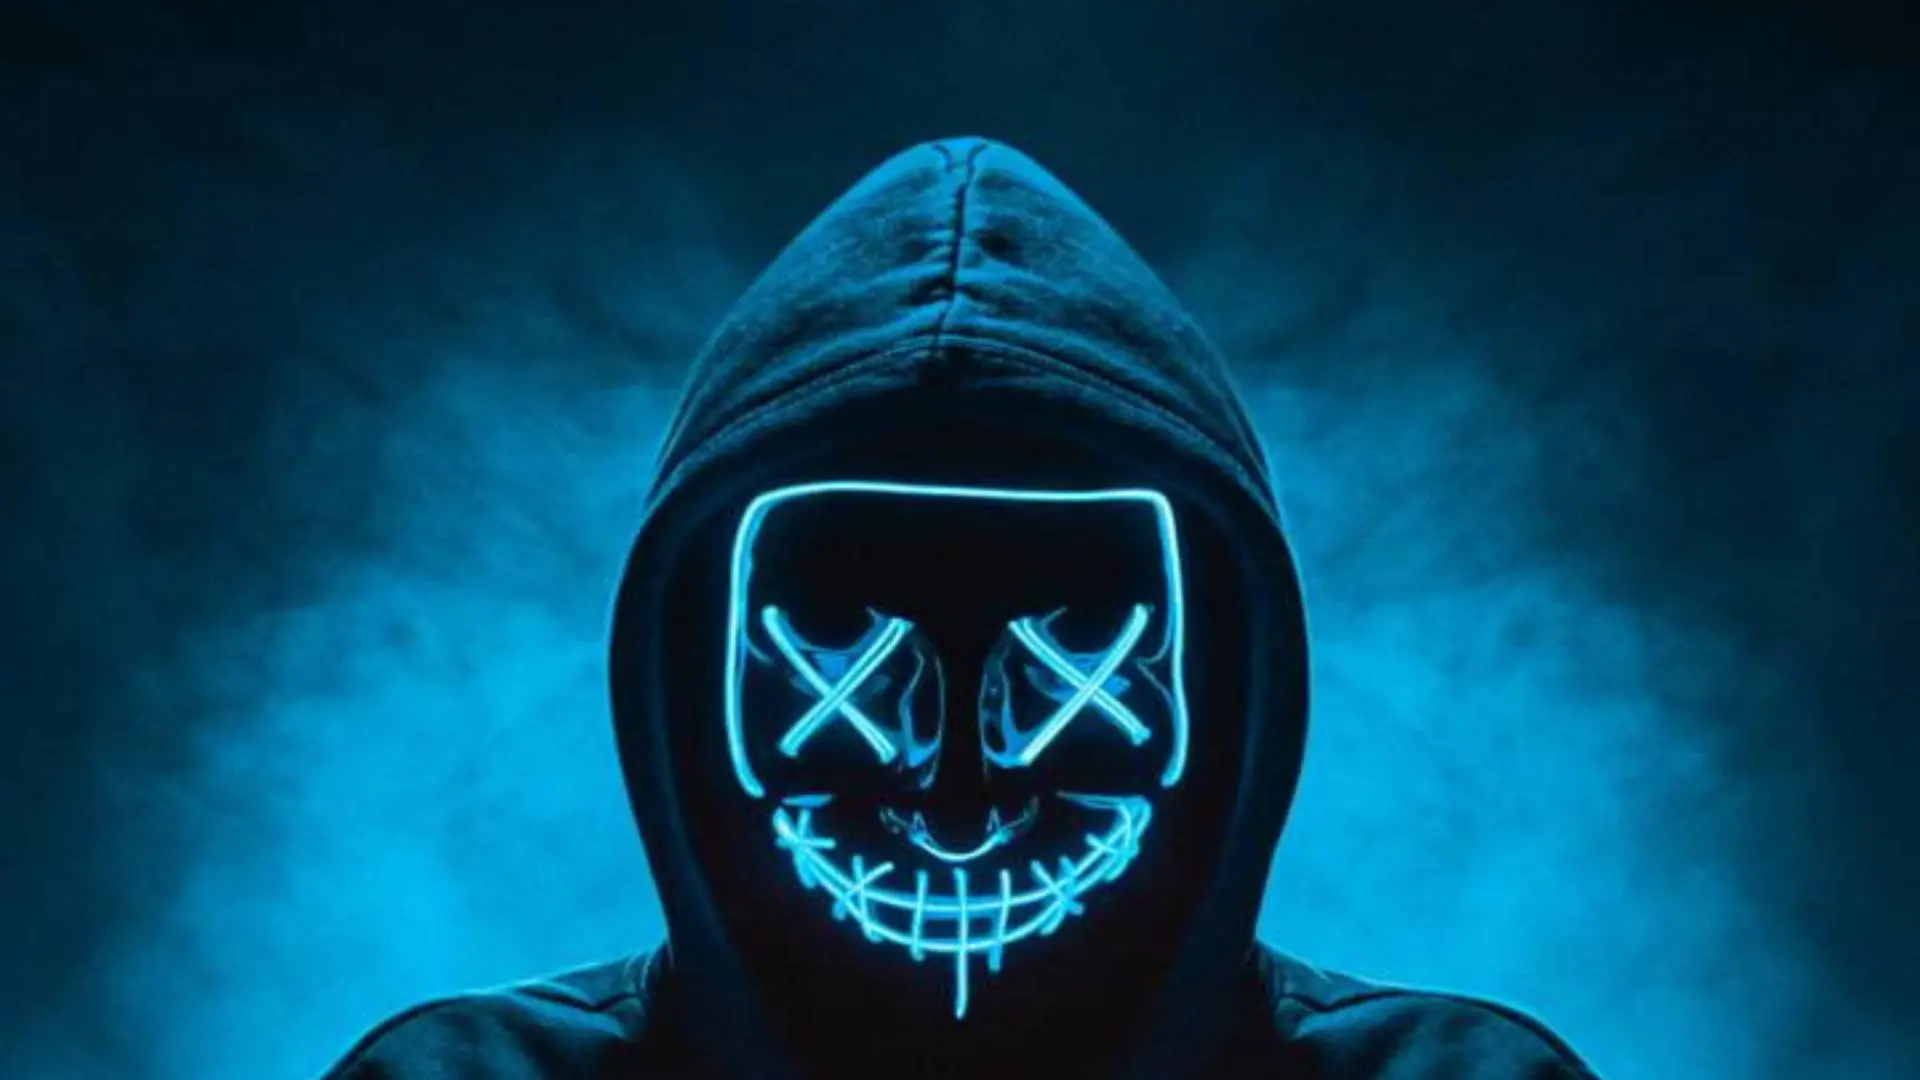 Unduh Wallpaper Neon Mask Dan Hoodie Hacker 4k | Wallpaper.com